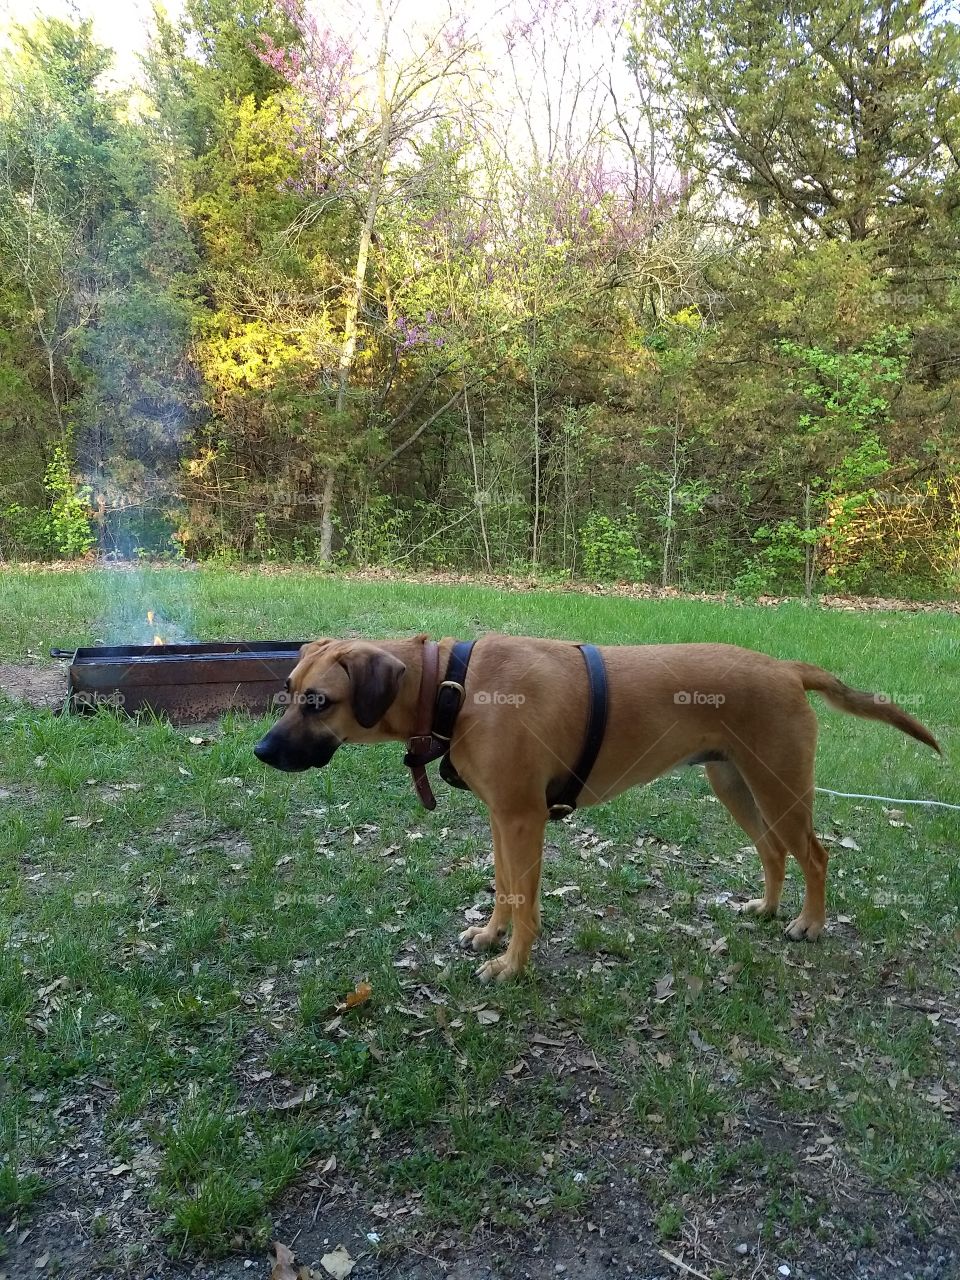 Sasha enjoying a camp fire.